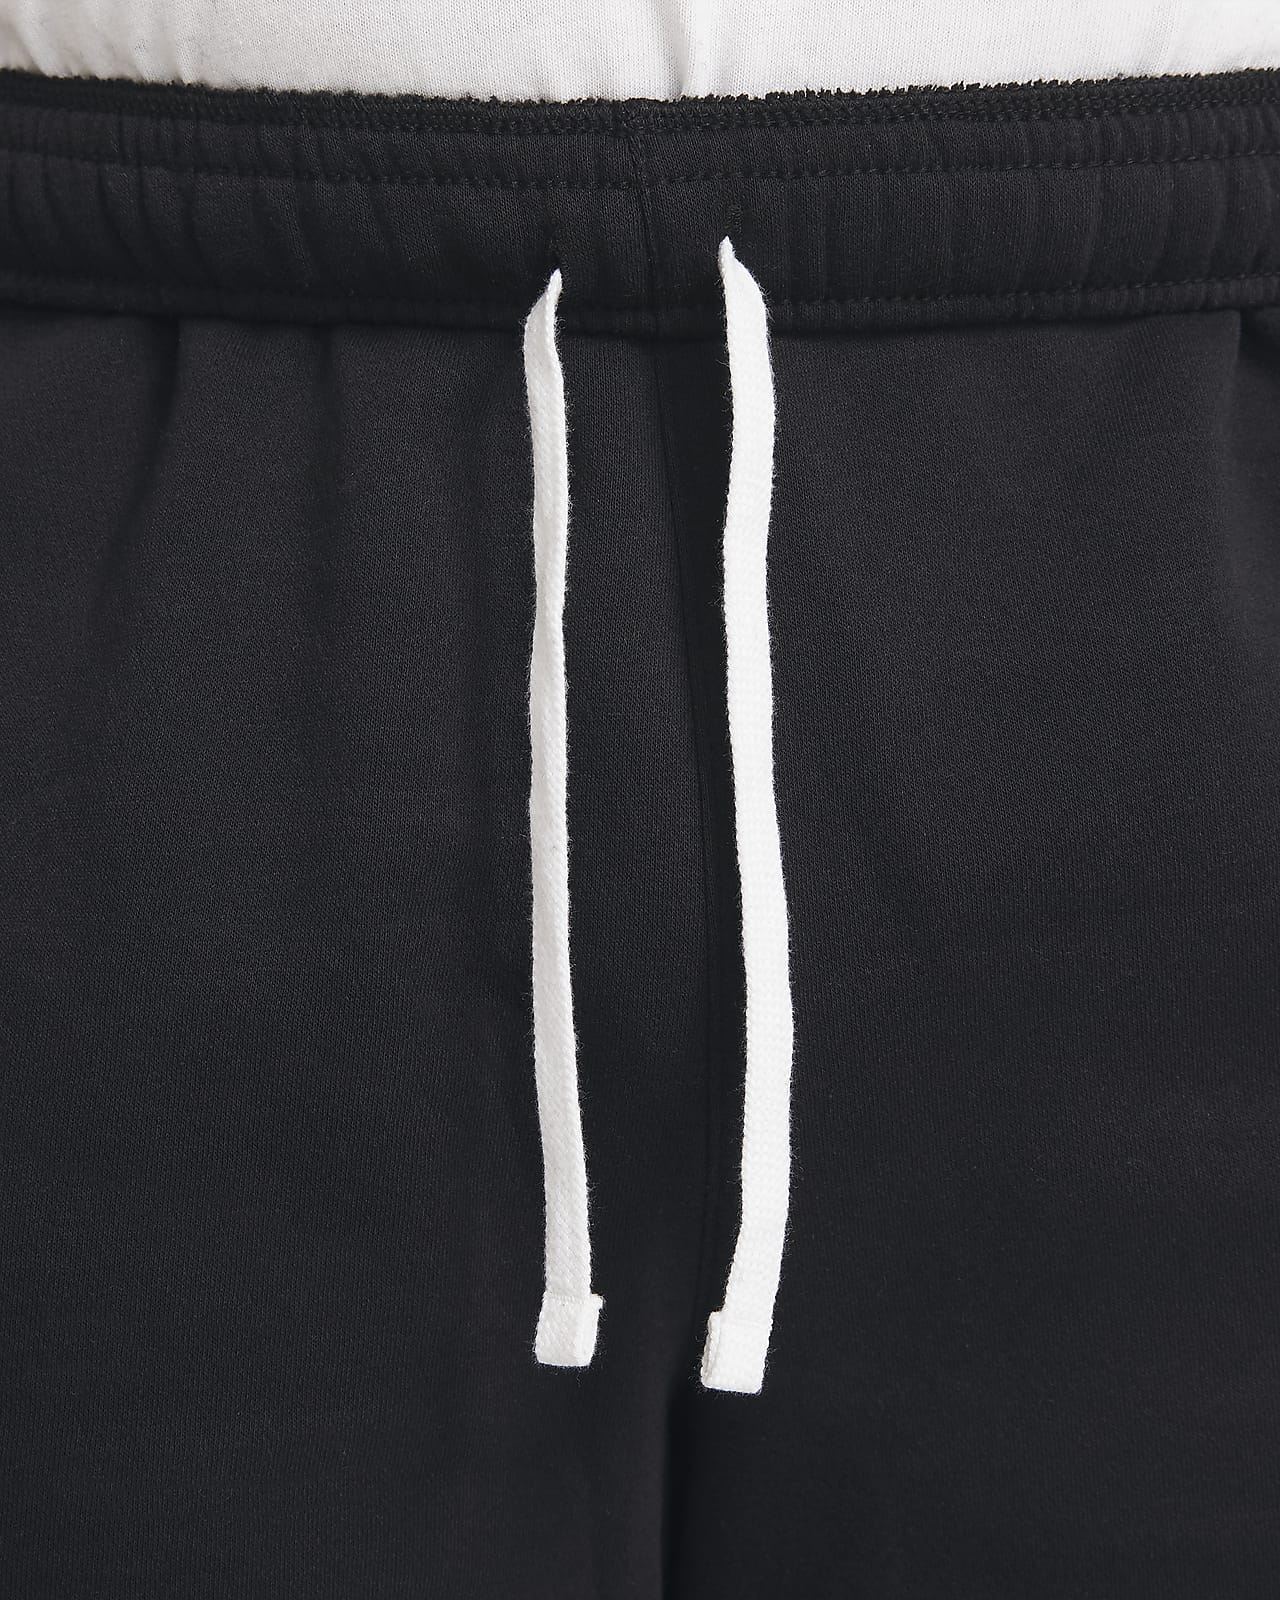 Shop Nike NSW Club Plus Fleece Shorts FB8830-010 black